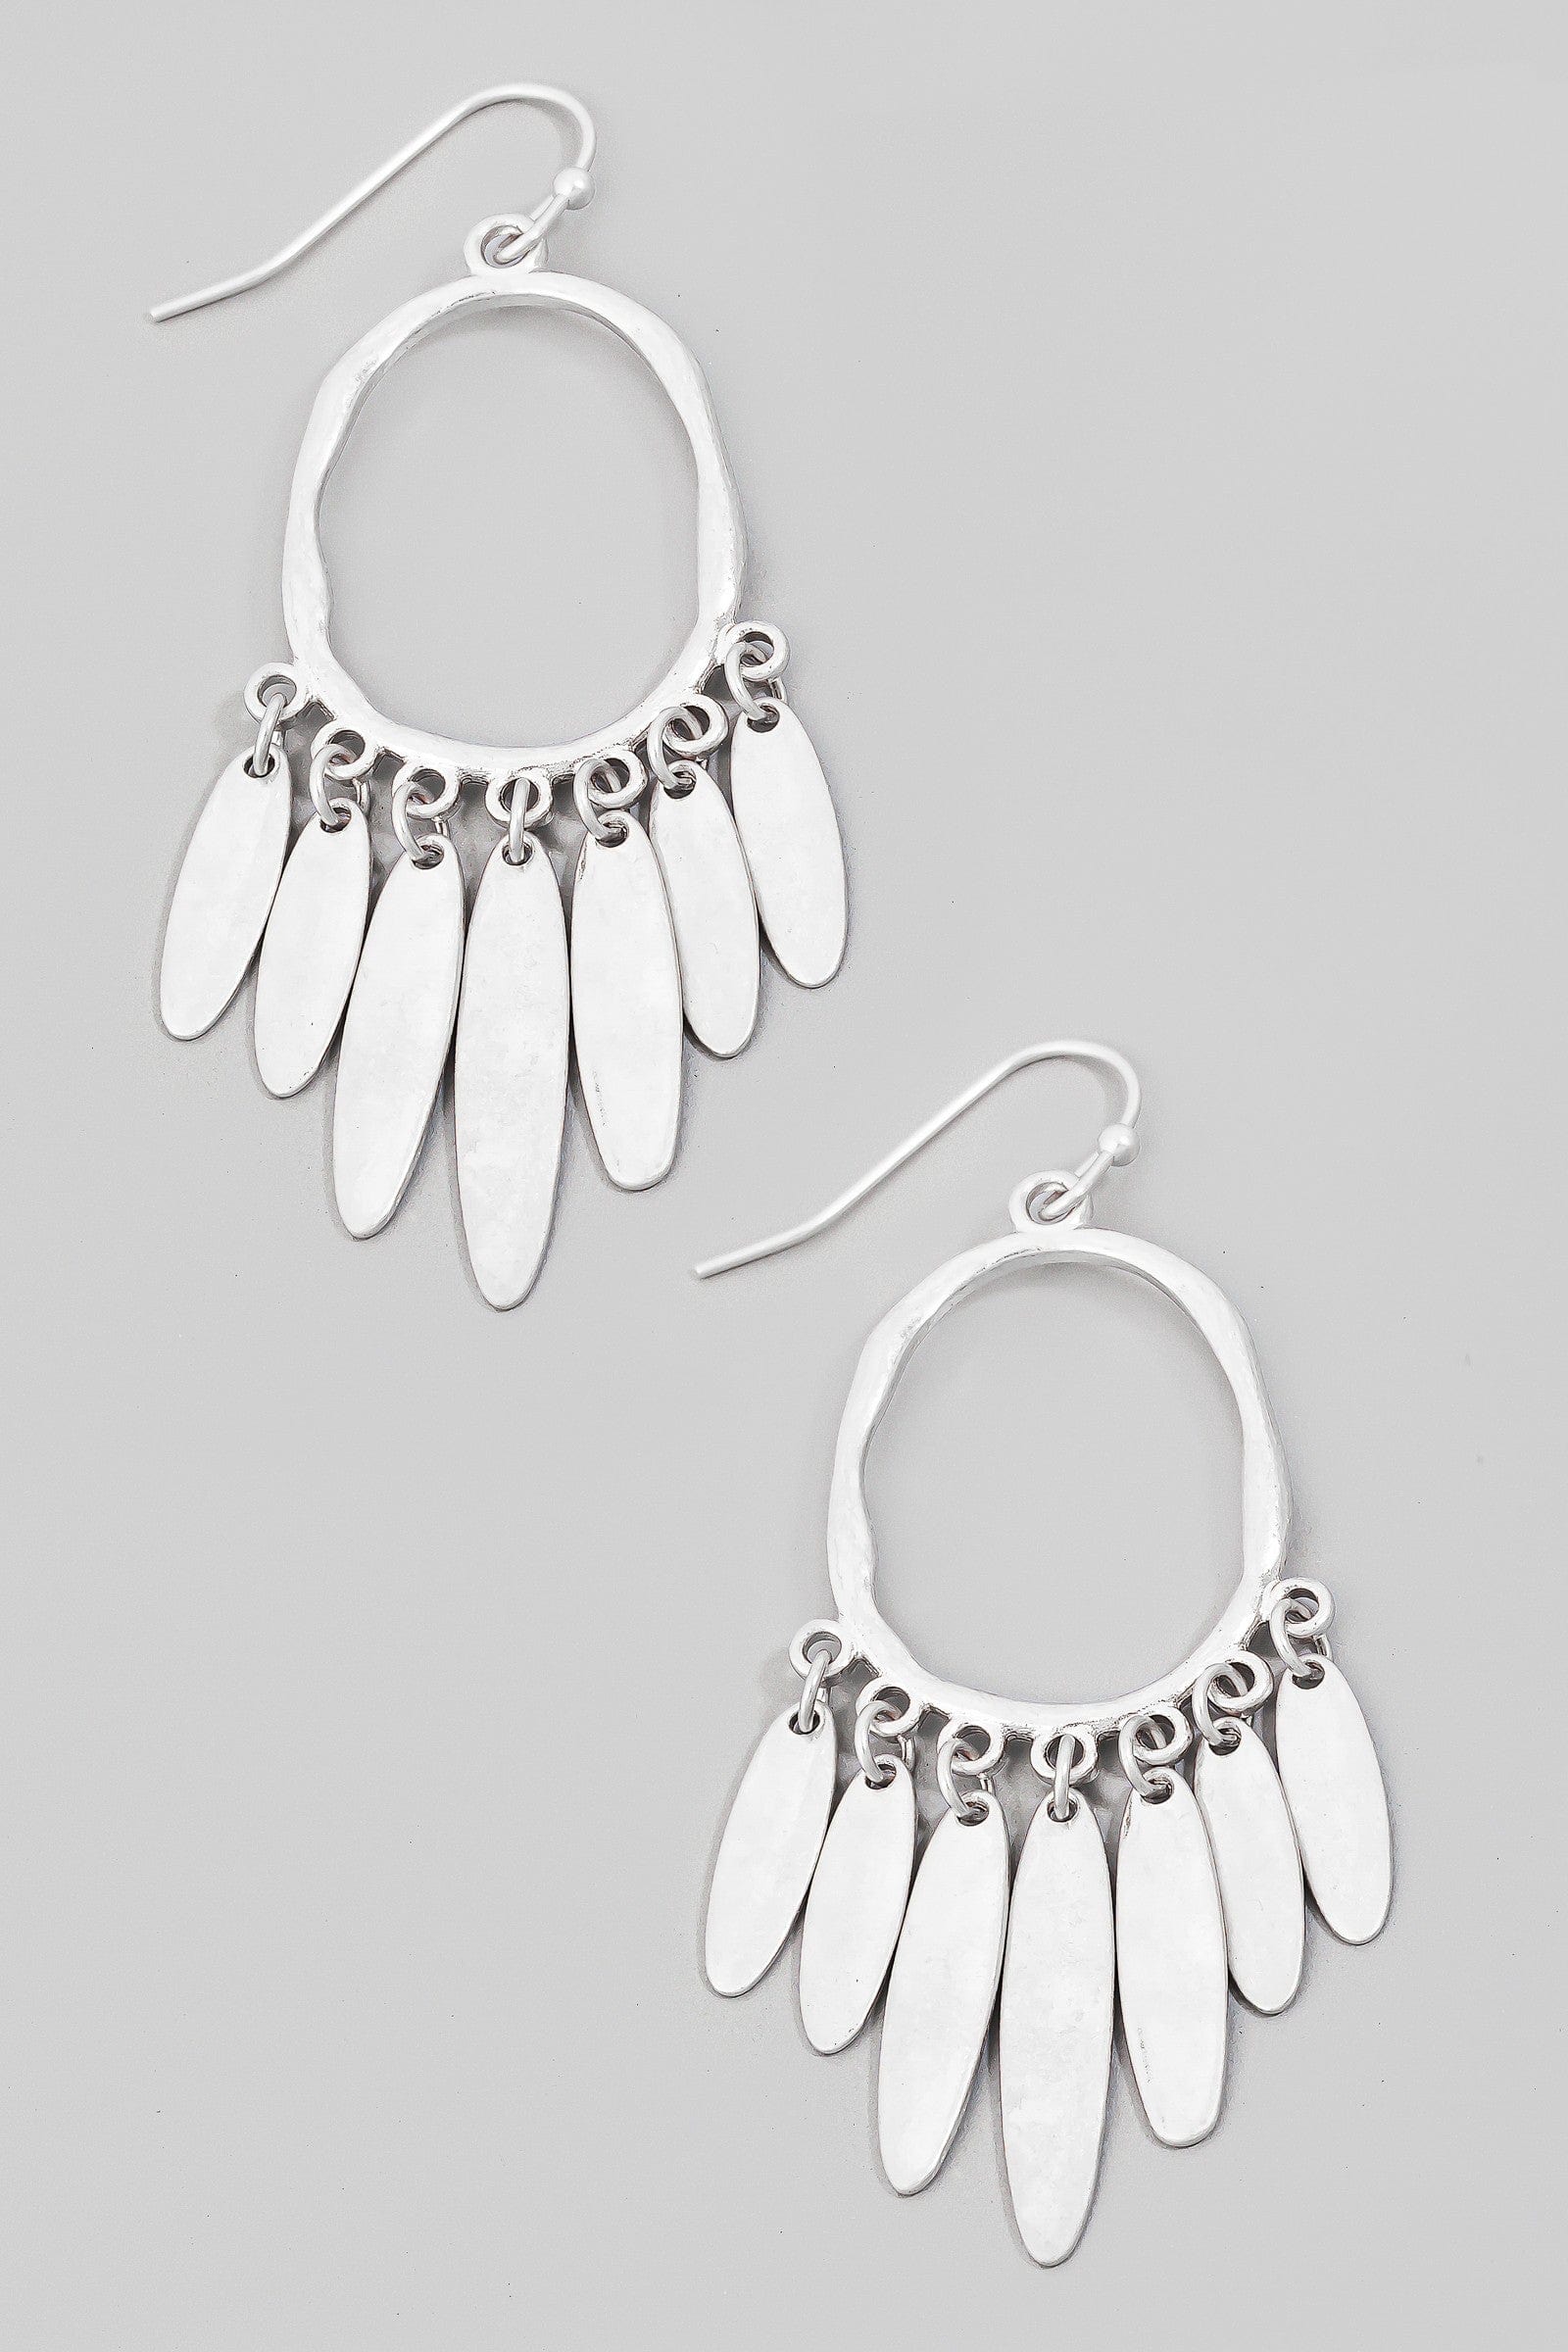 fame accessories Jewelry - Earrings Metallic Hammered Fringe Hoop Drop Earrings In Silver